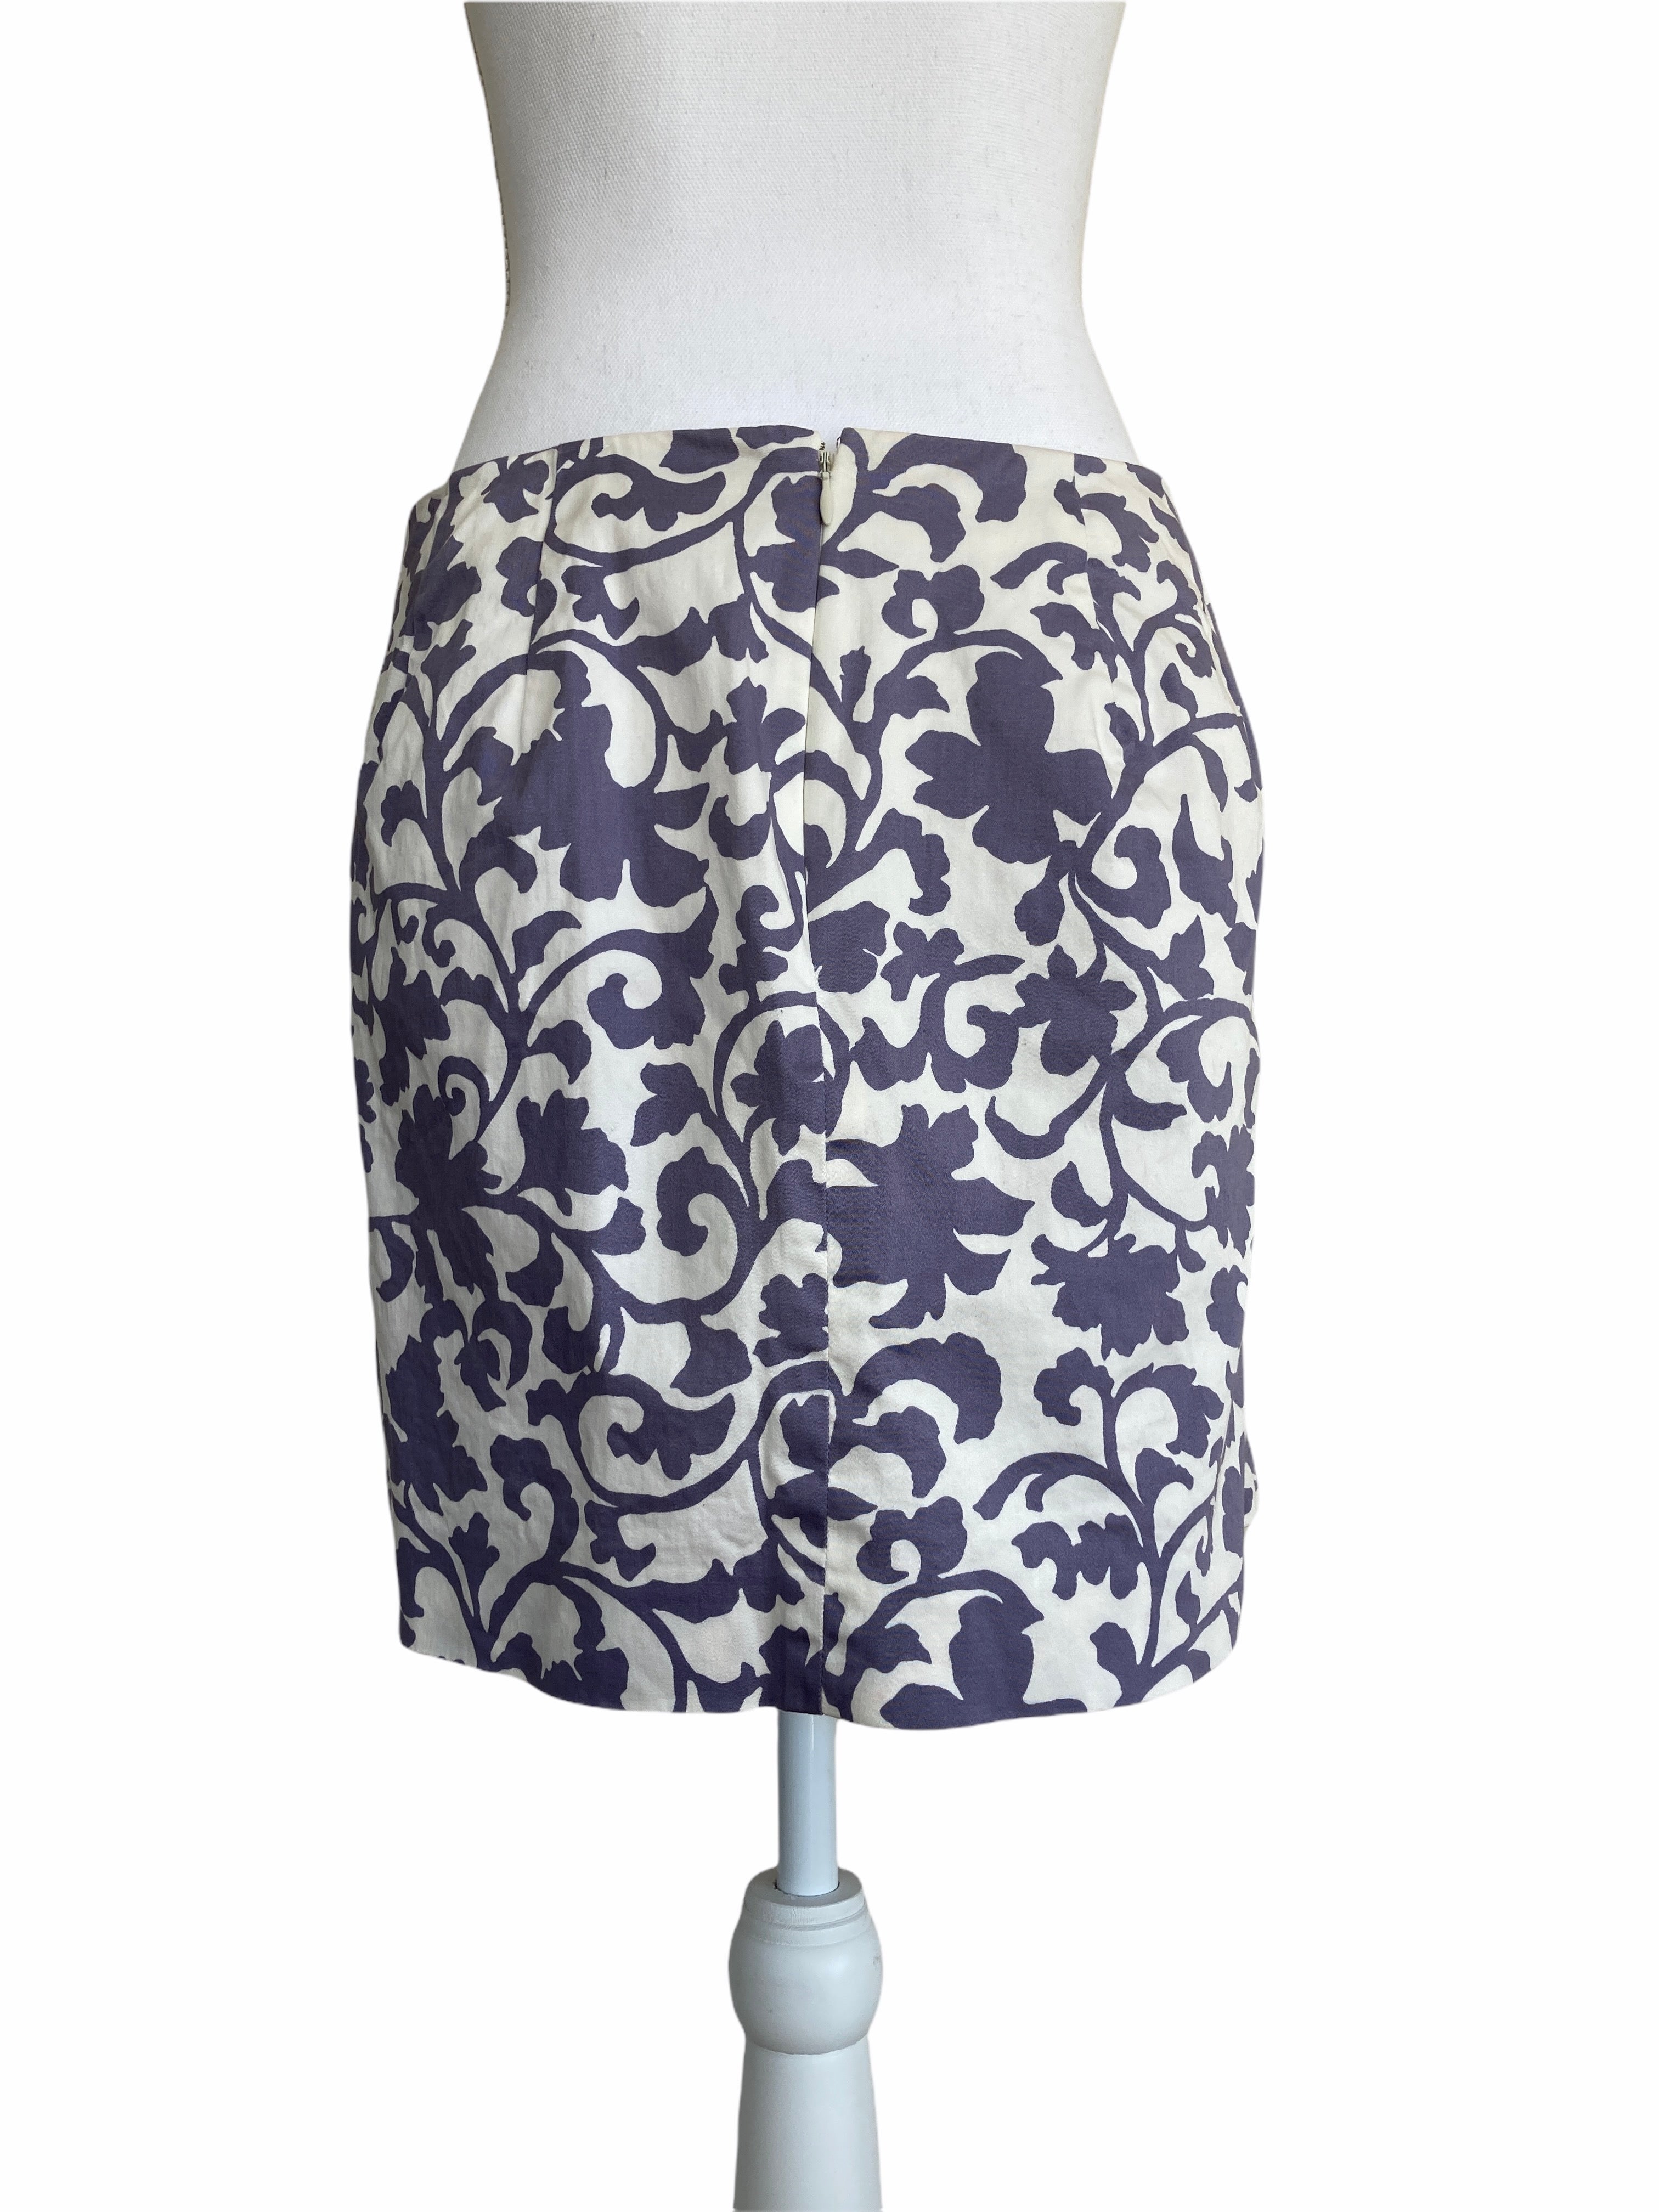 J. Crew Purple Print Skirt, 6